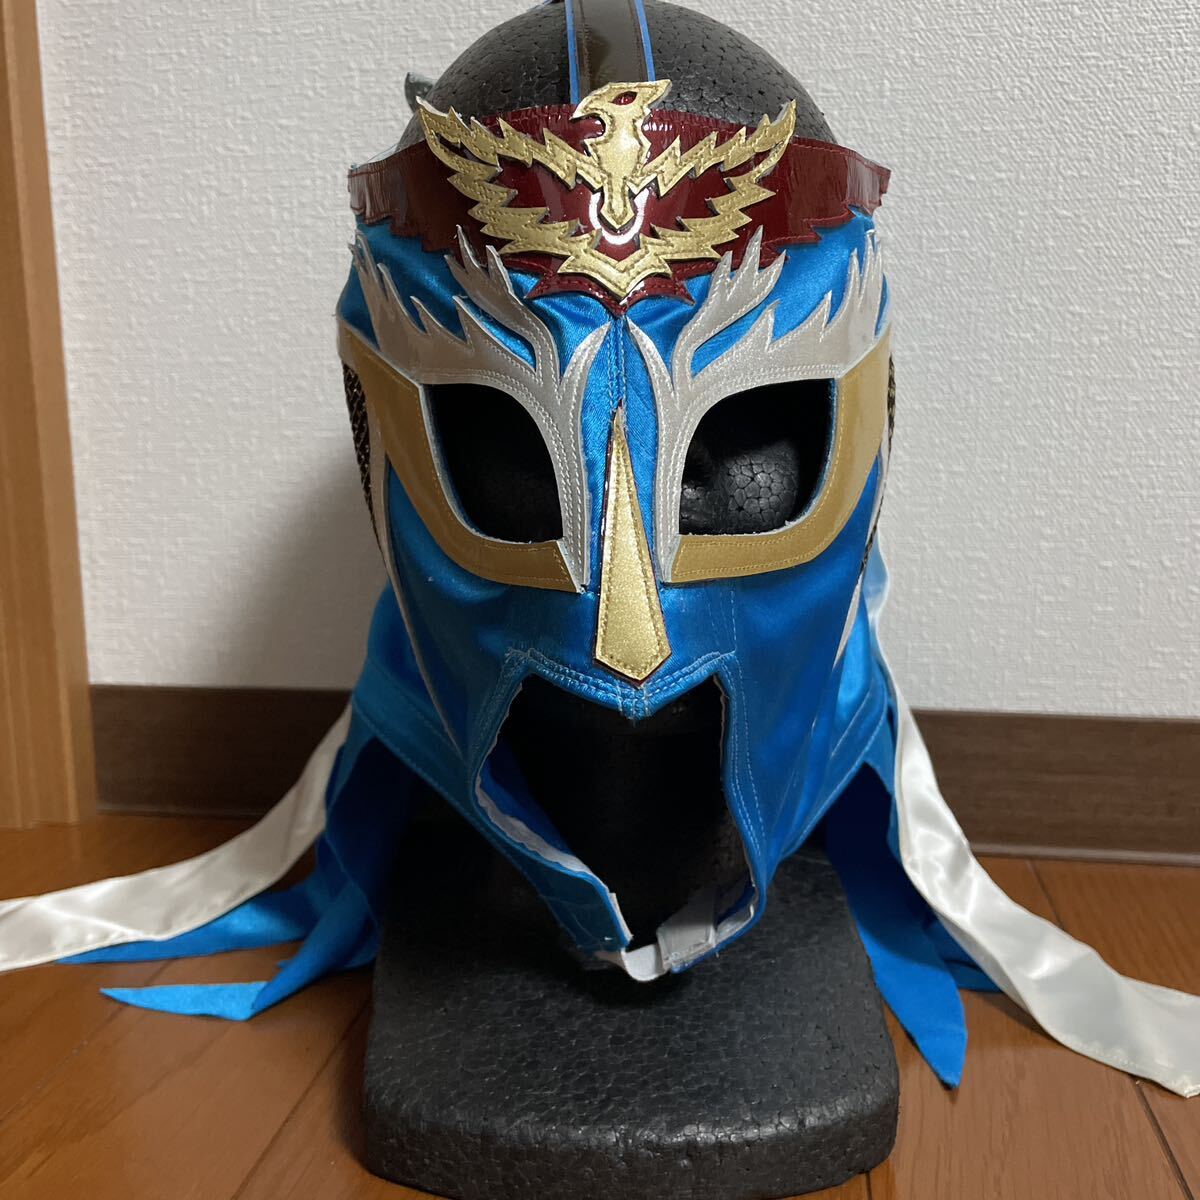  Hayabusa private маска no- чай Boy производства FMW все Япония Professional Wrestling 